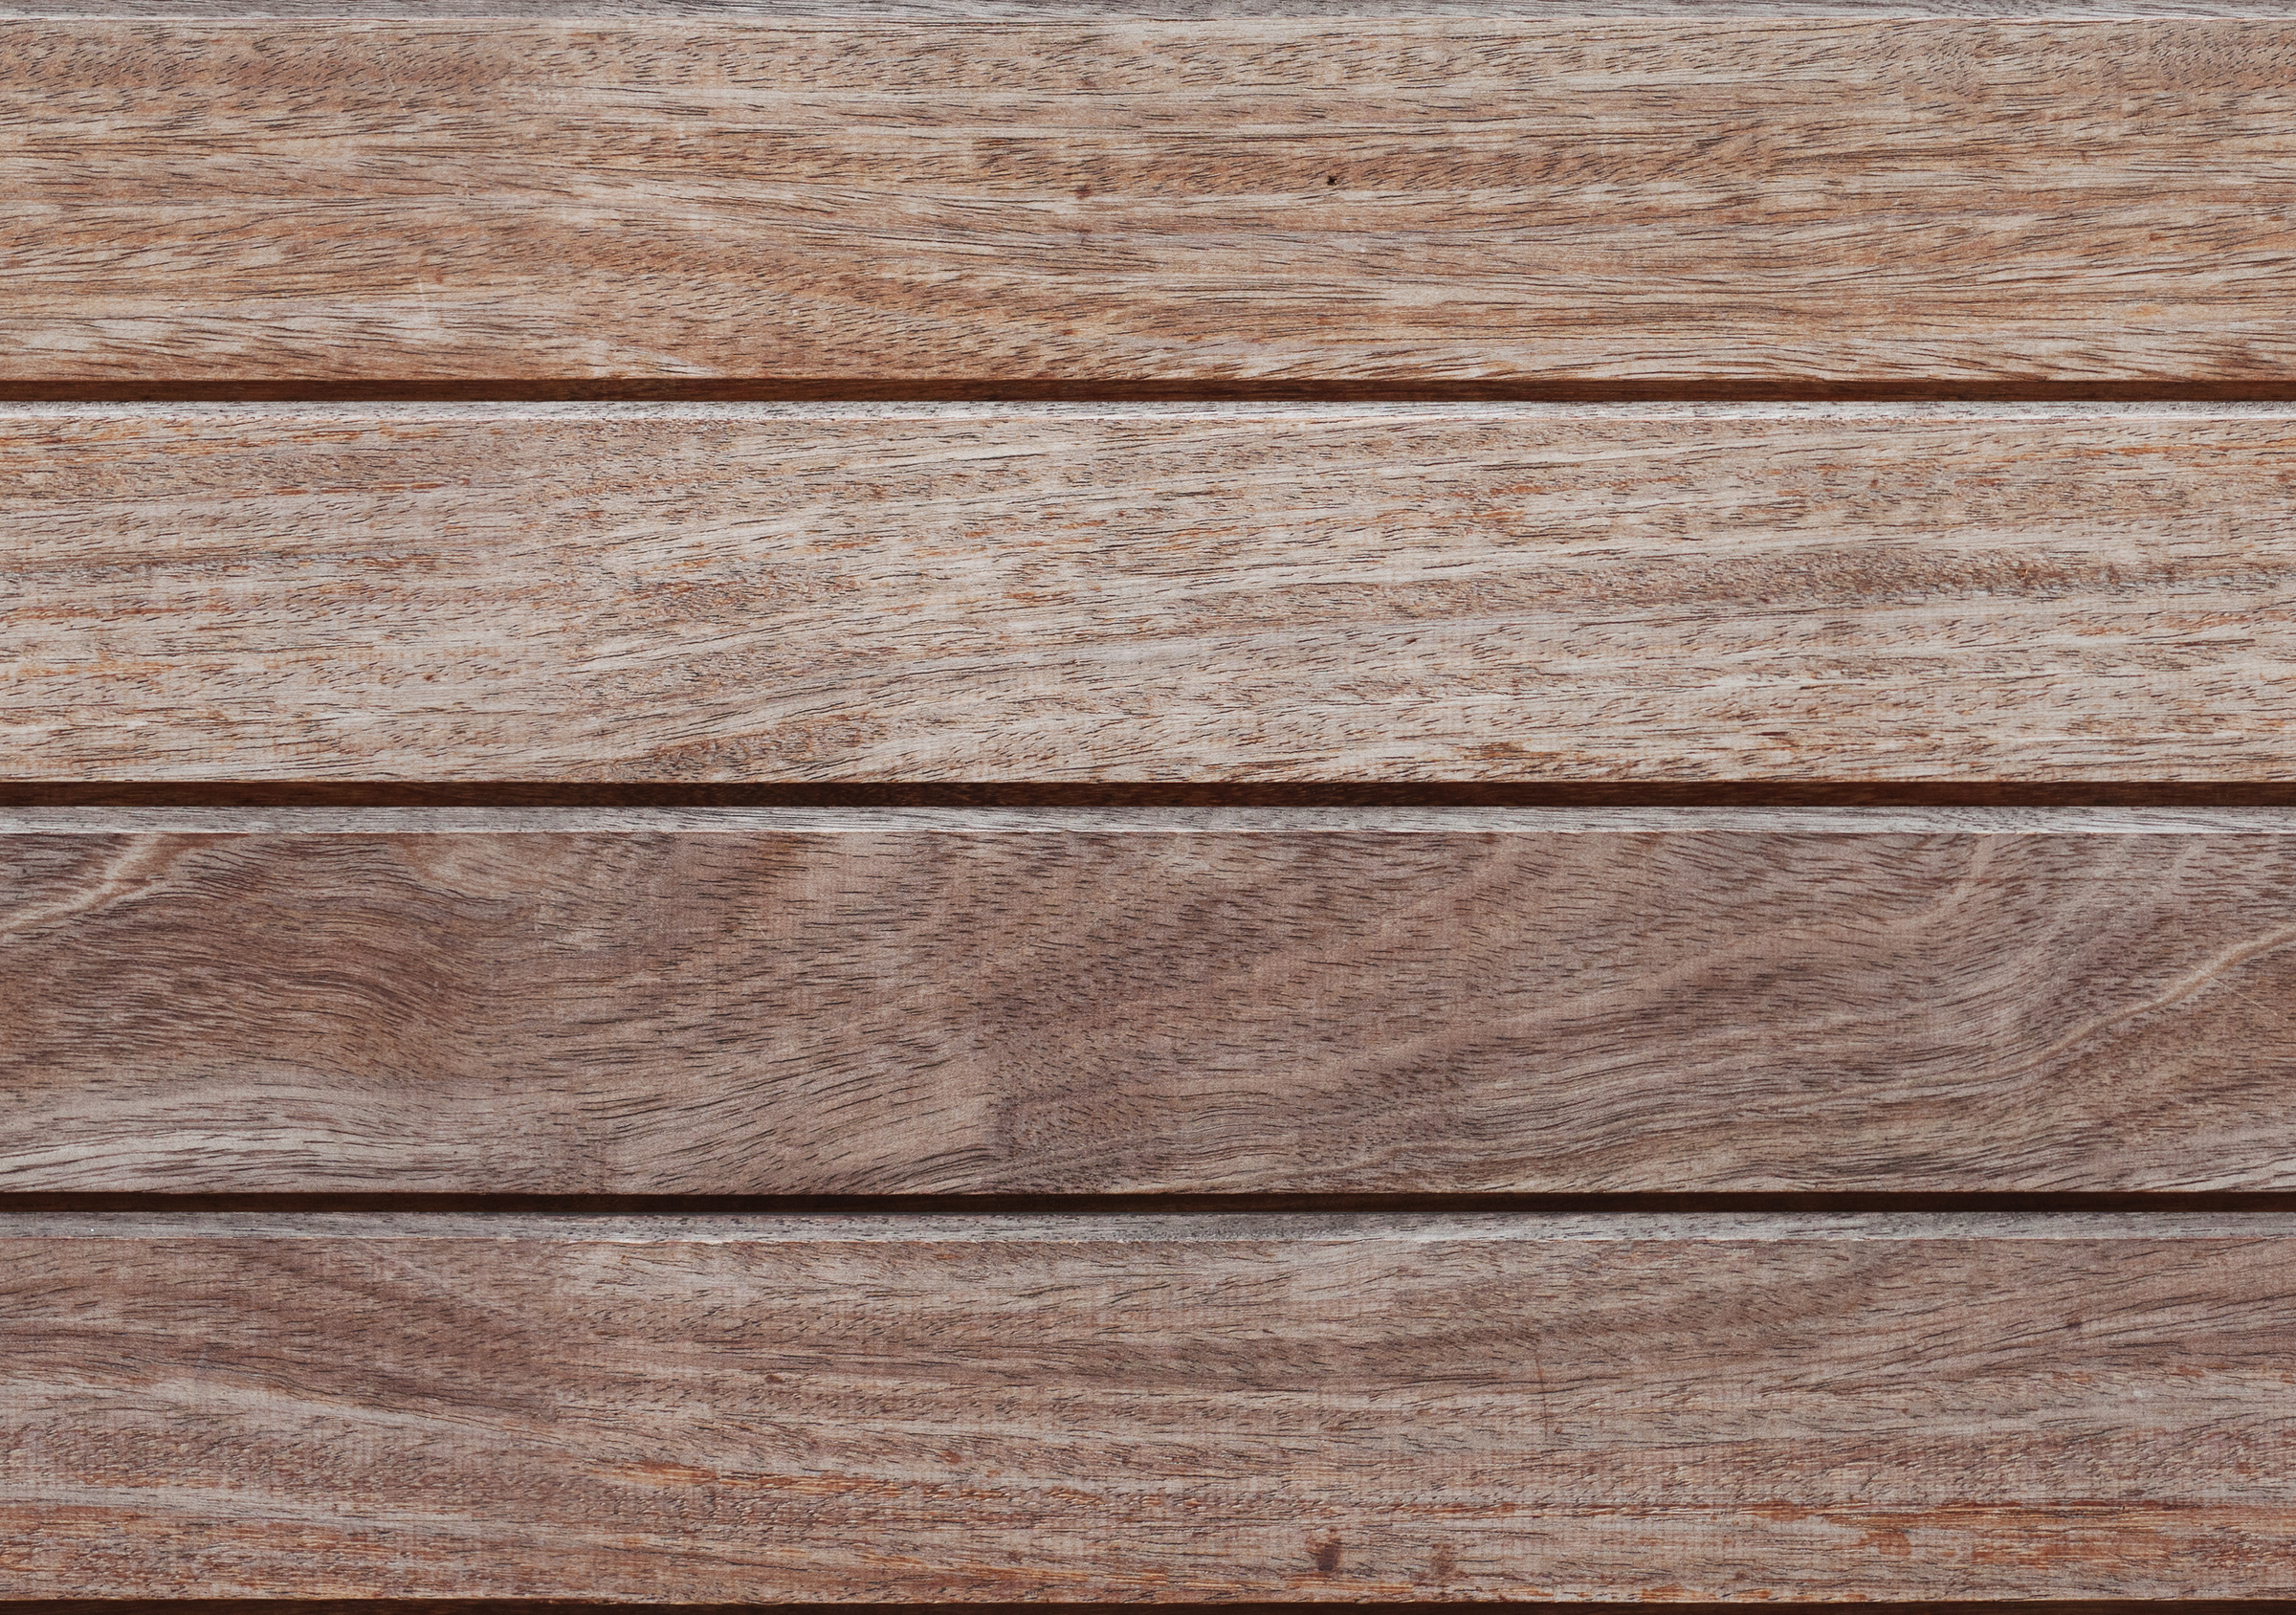 Wooden planks texture photo